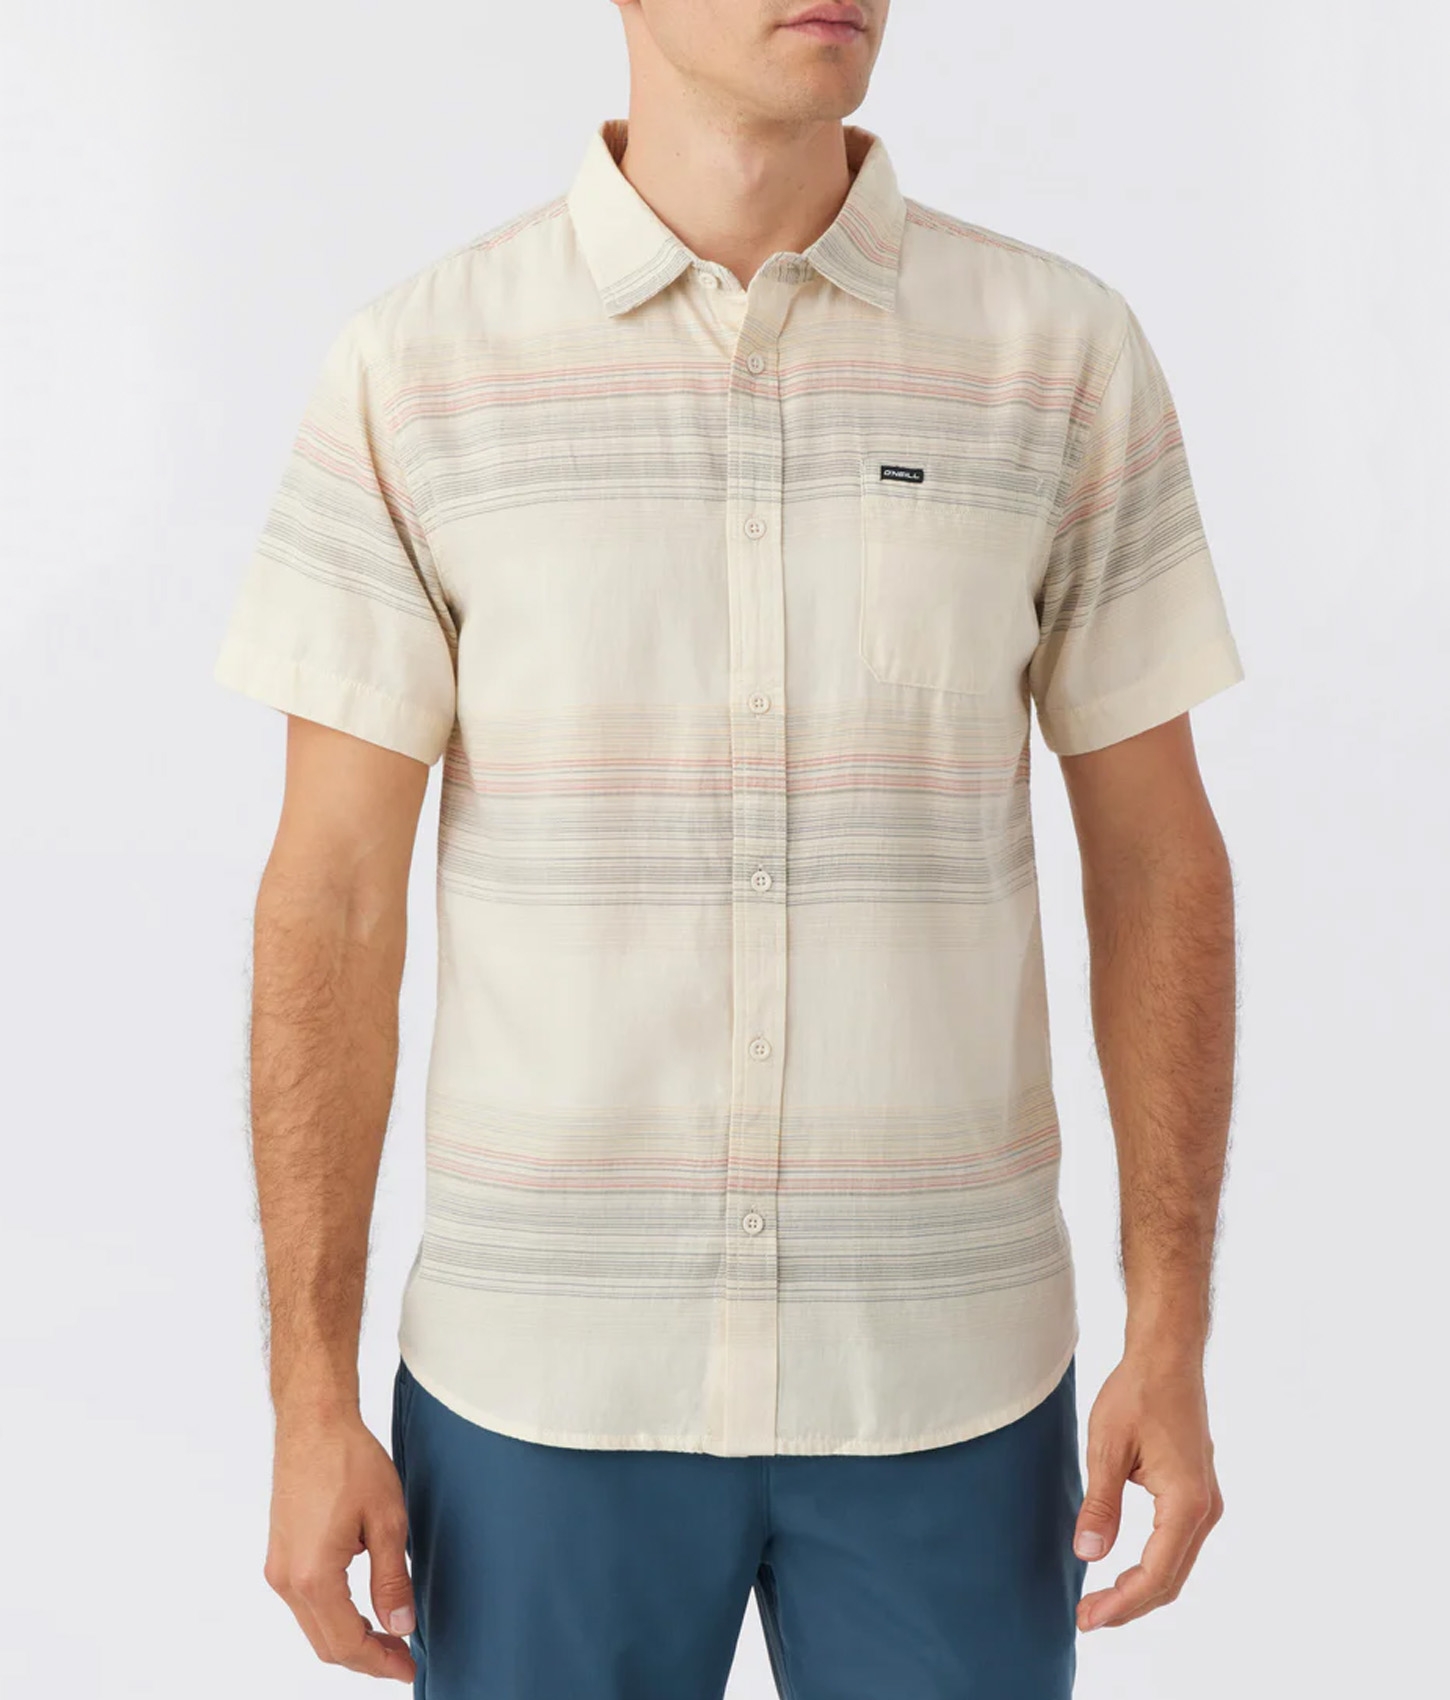 Seafaring Stripe Standard Shirt